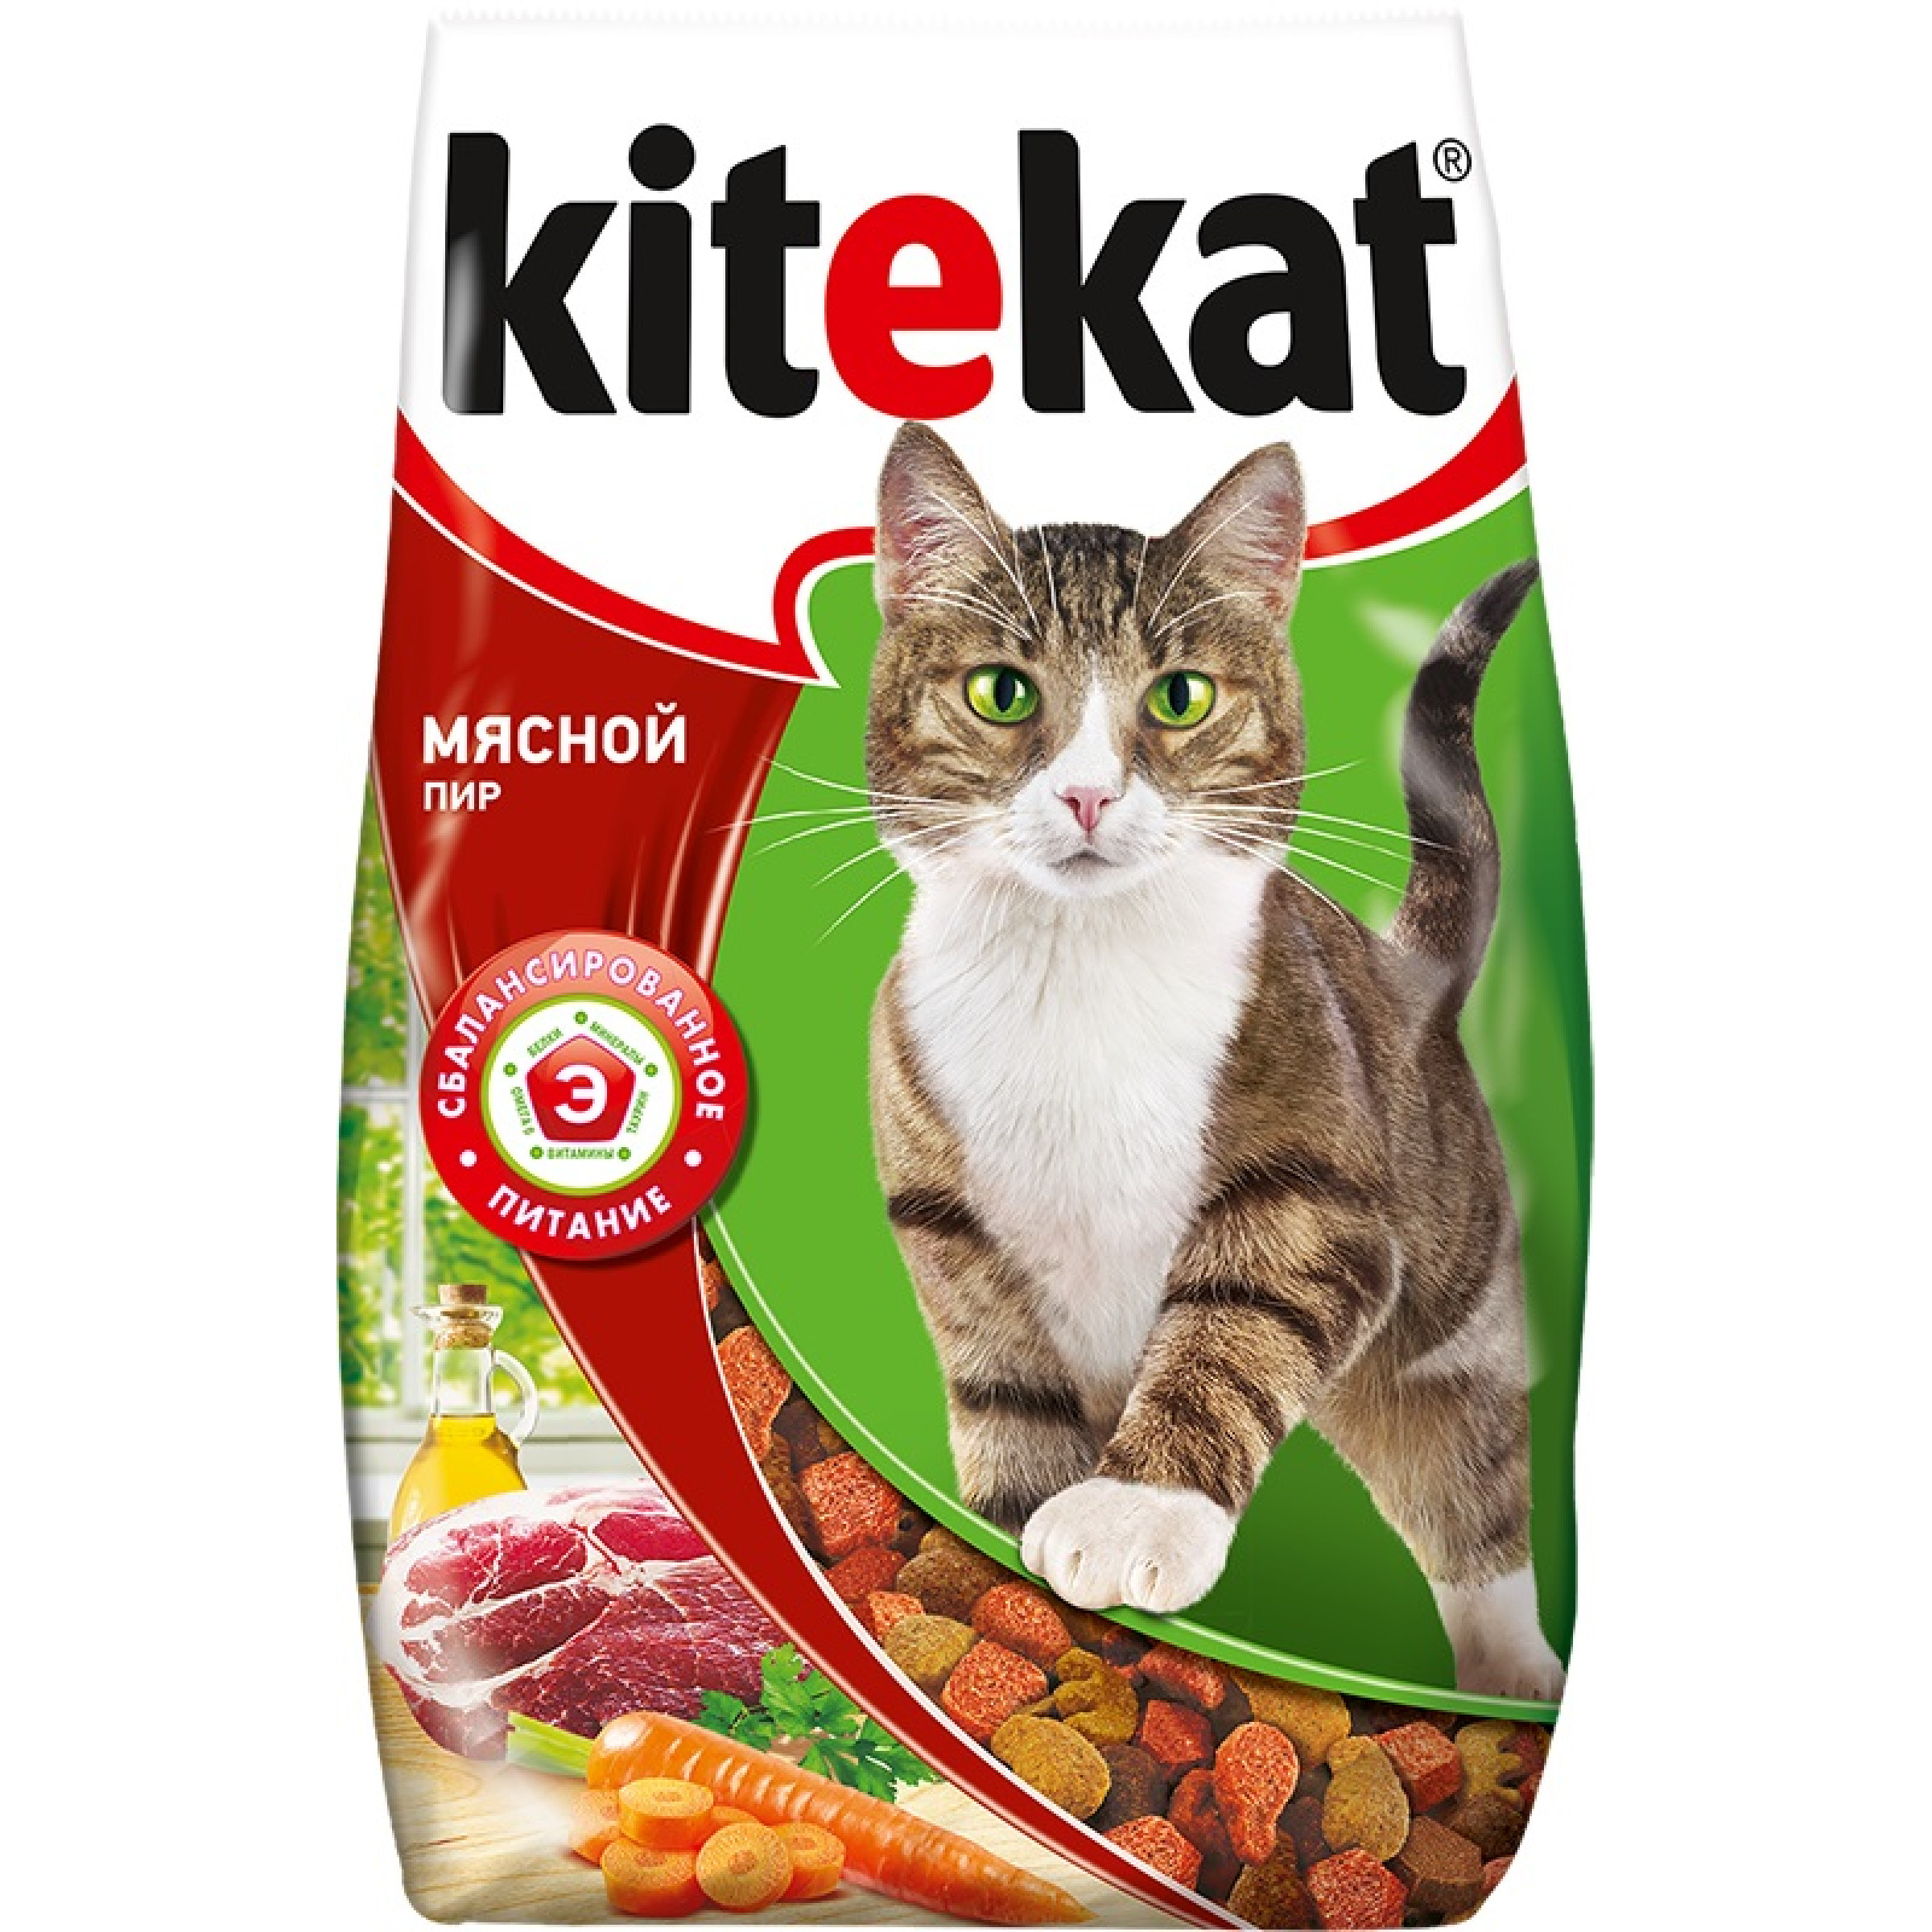 Сухой корм для кошек Kitekat Мясной пир, 1,9 кг